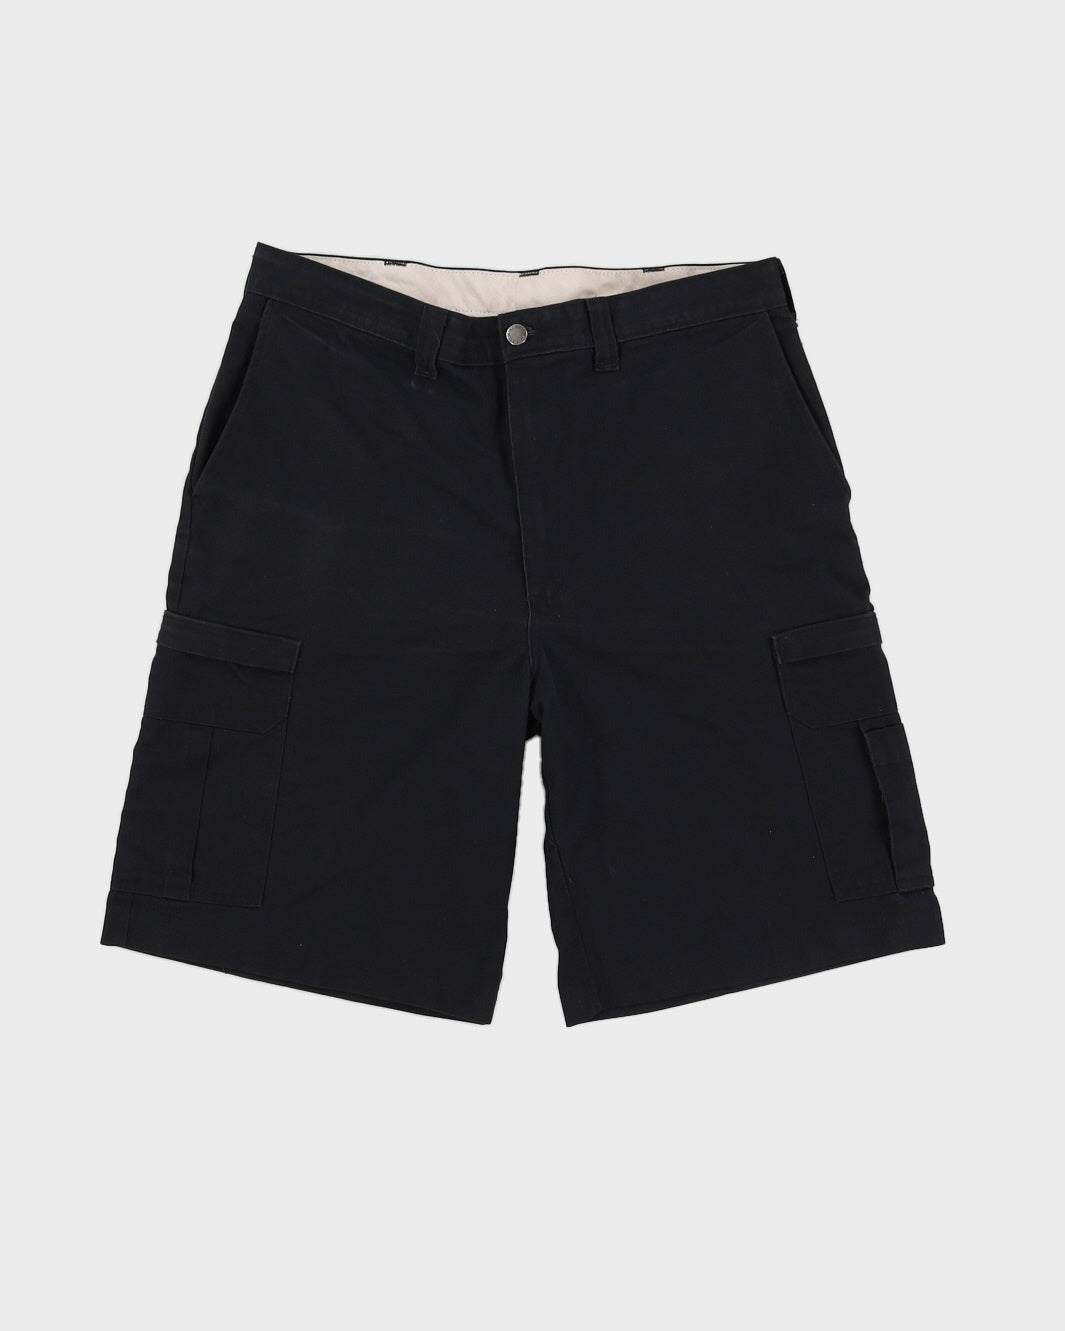 Dickies Black Cargo Shorts - W36